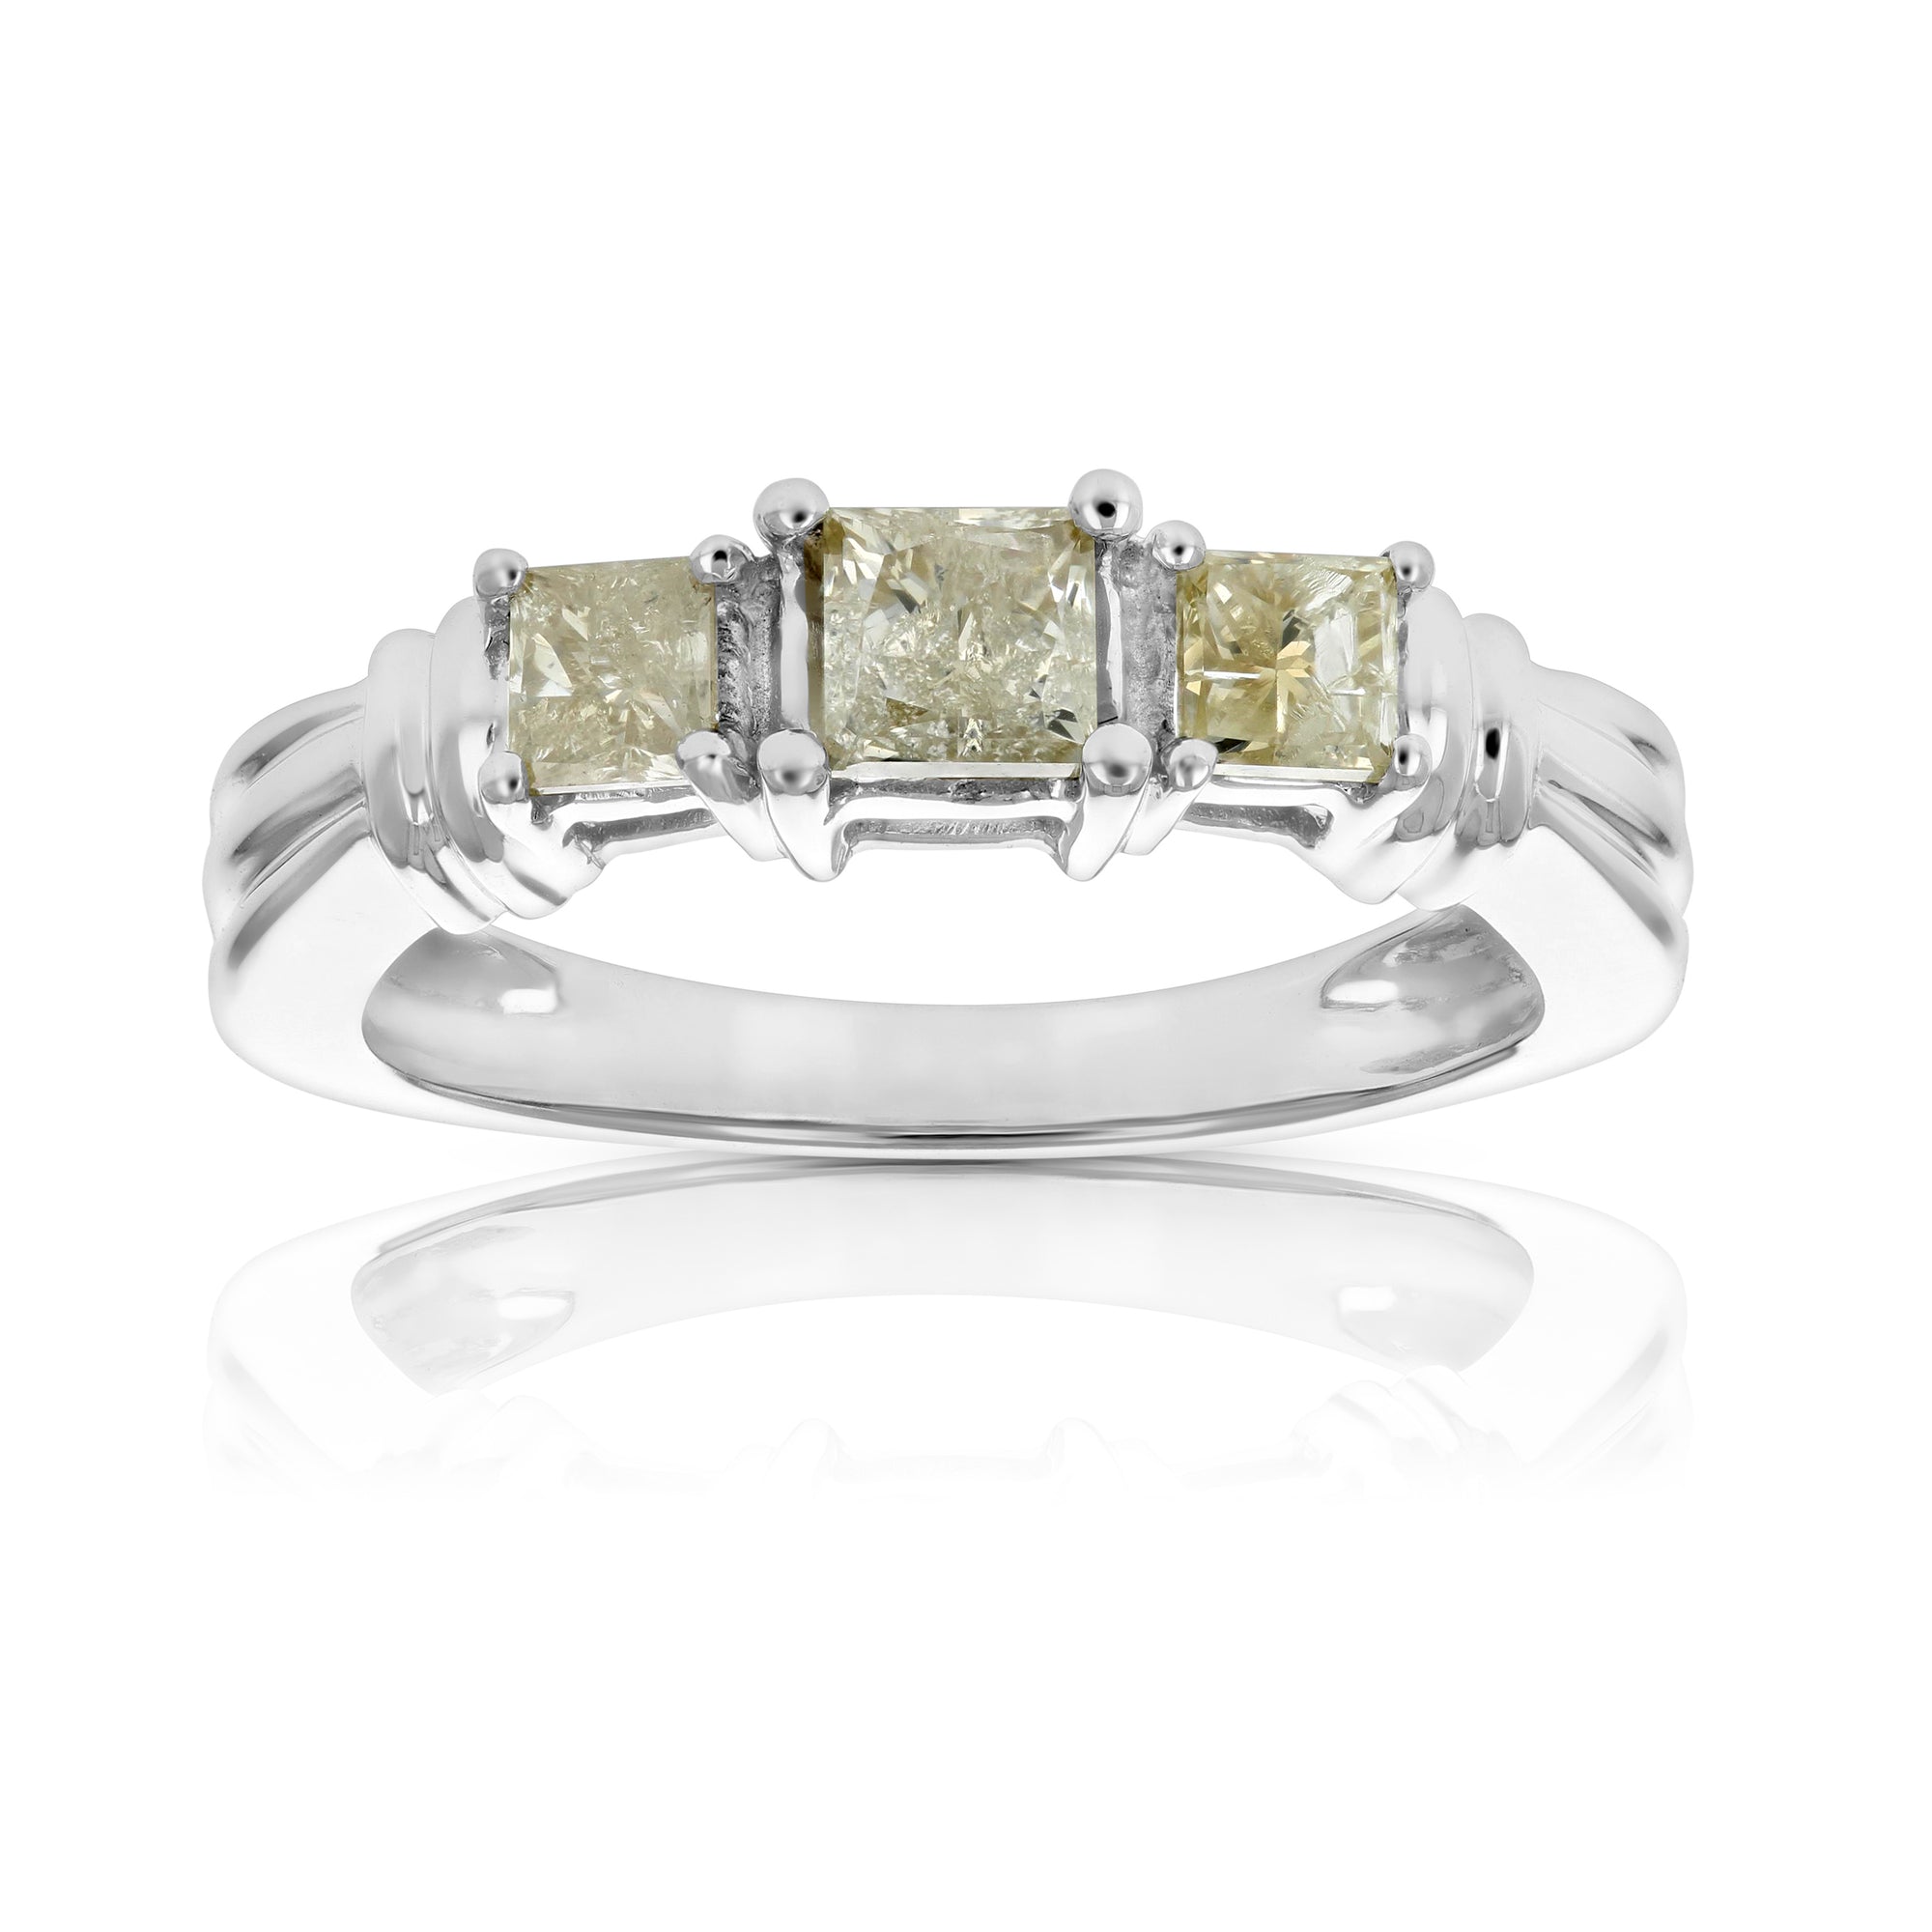 1 cttw Princess Cut Diamond 3 Stone Engagement Ring 14K White Gold Size 4